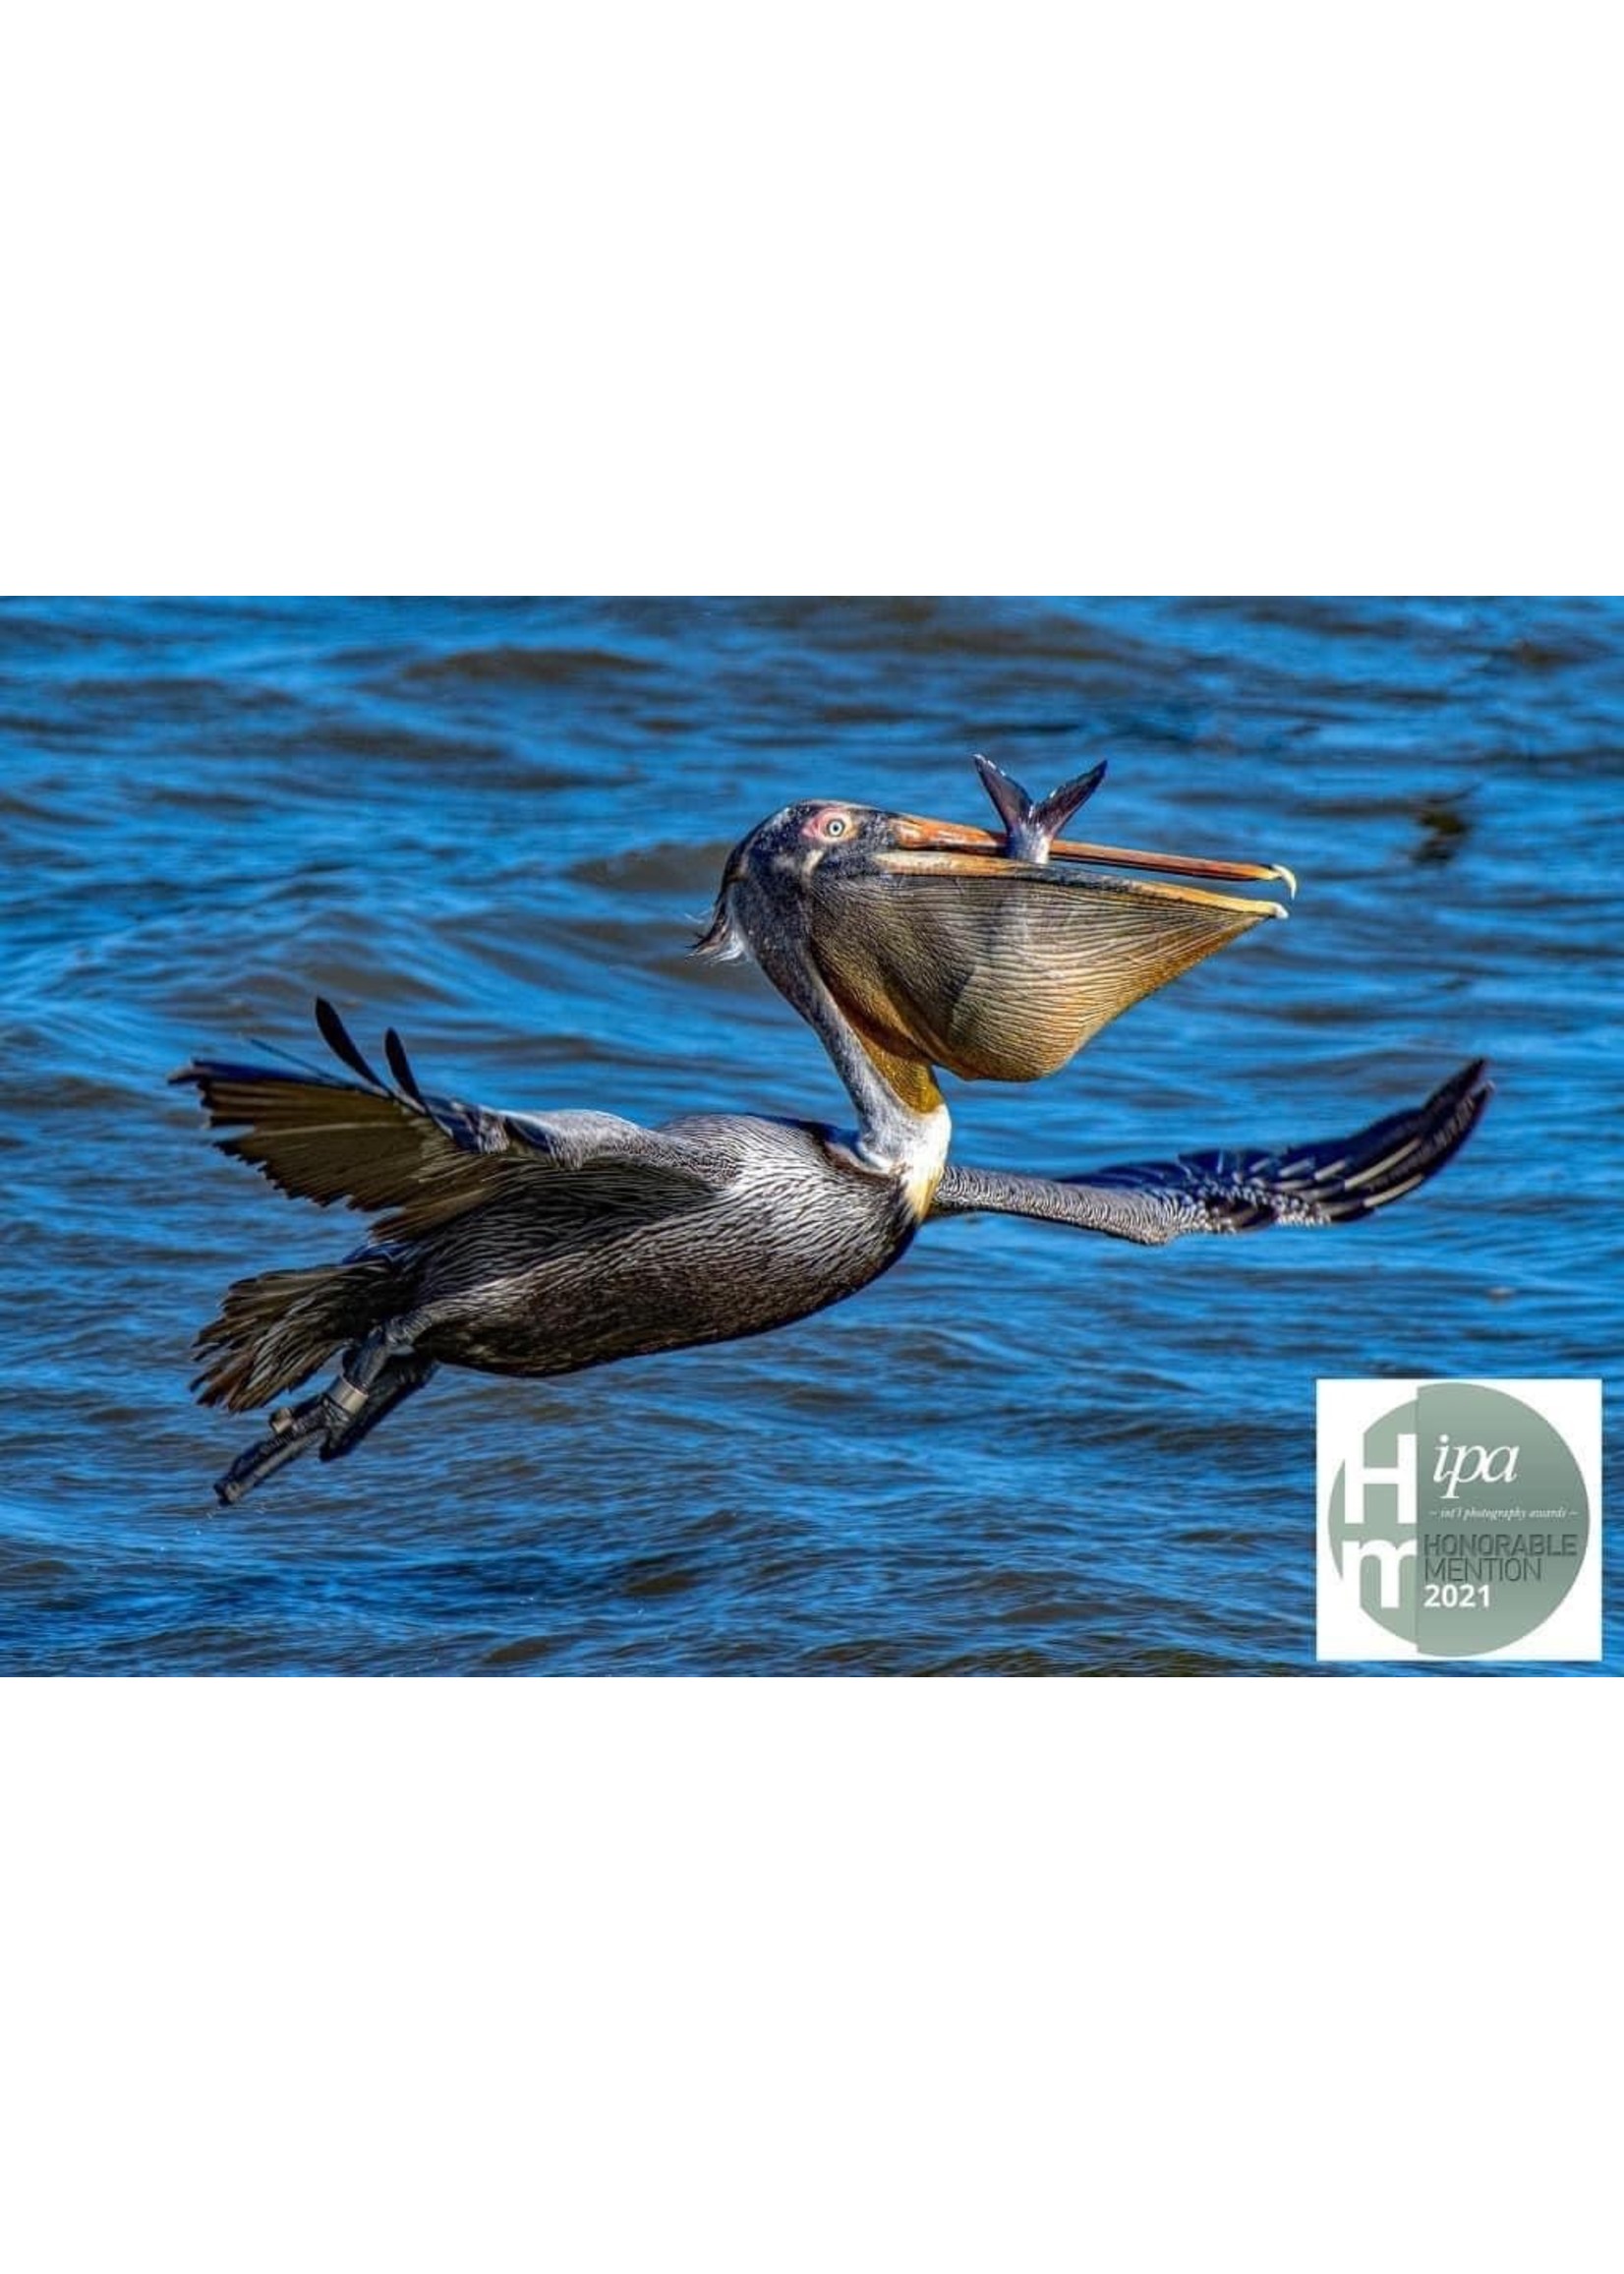 Kathy Dennehey Award winning photo,   Pelican Taking Flight With Fish  8x10 black matte, photographer Kathy Dennehey